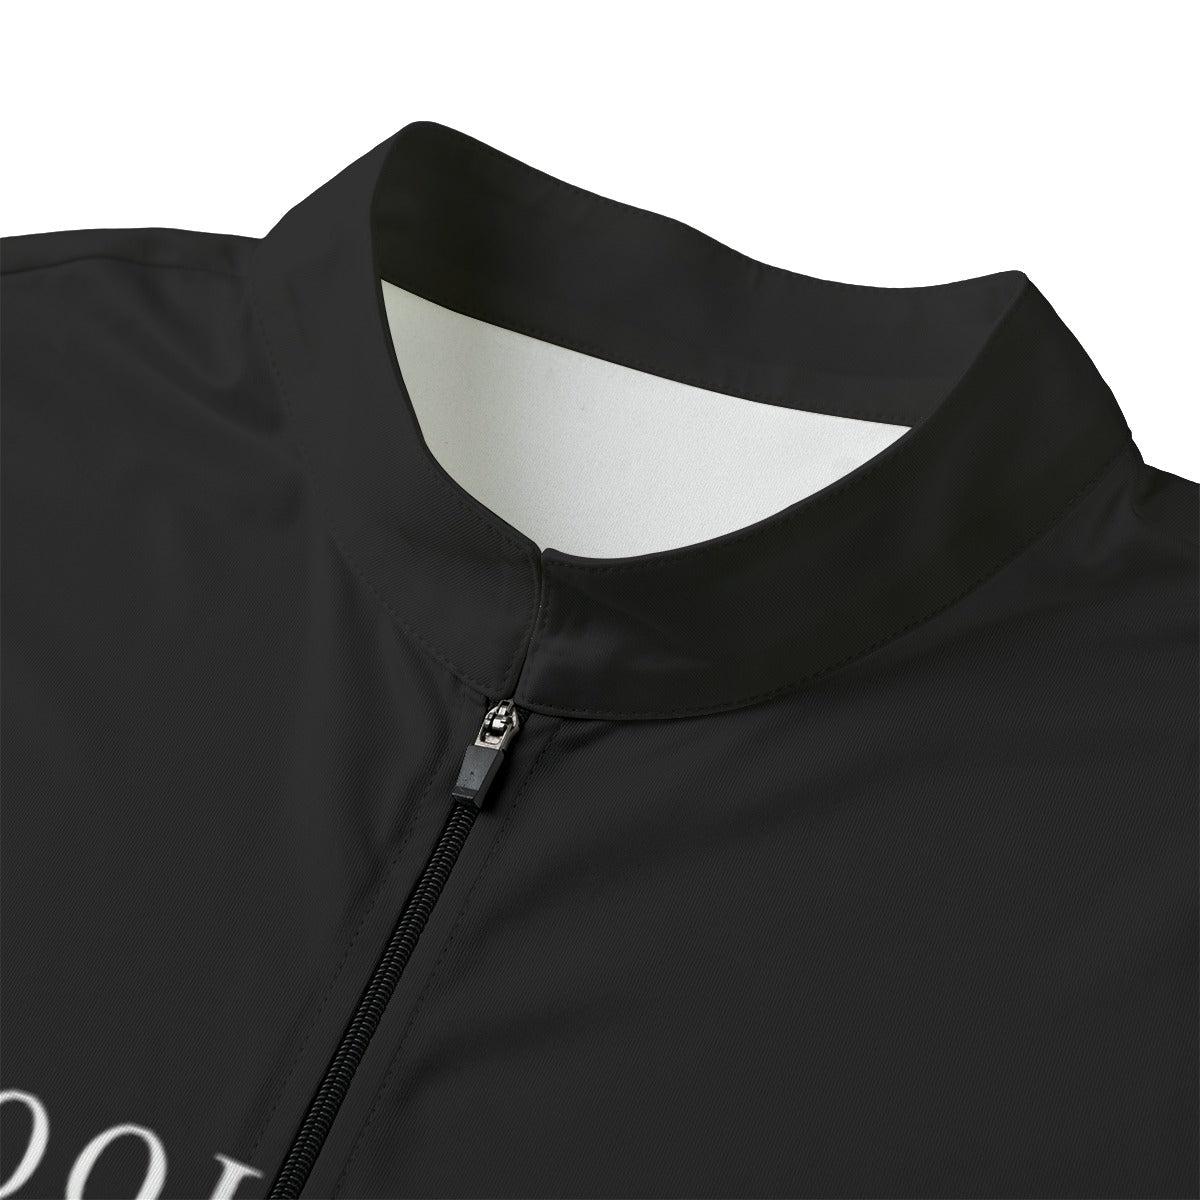 All-over Print Men's Billiard Cloth With Black Zipper